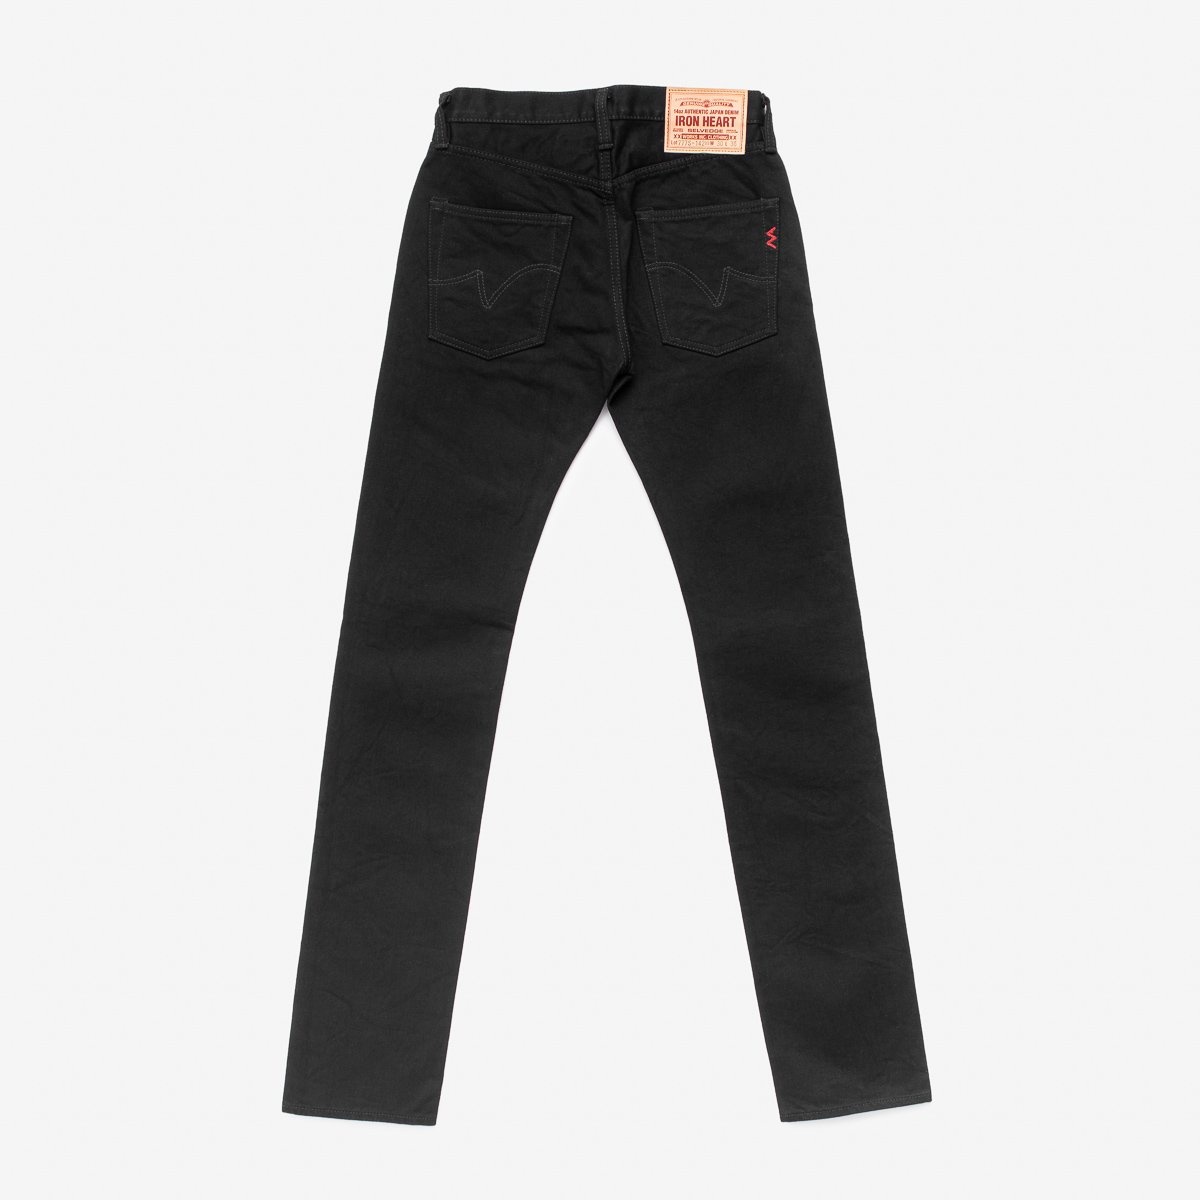 IH-777S-142bb 14oz Selvedge Denim Slim Tapered Cut Jeans - Black/Black - 4